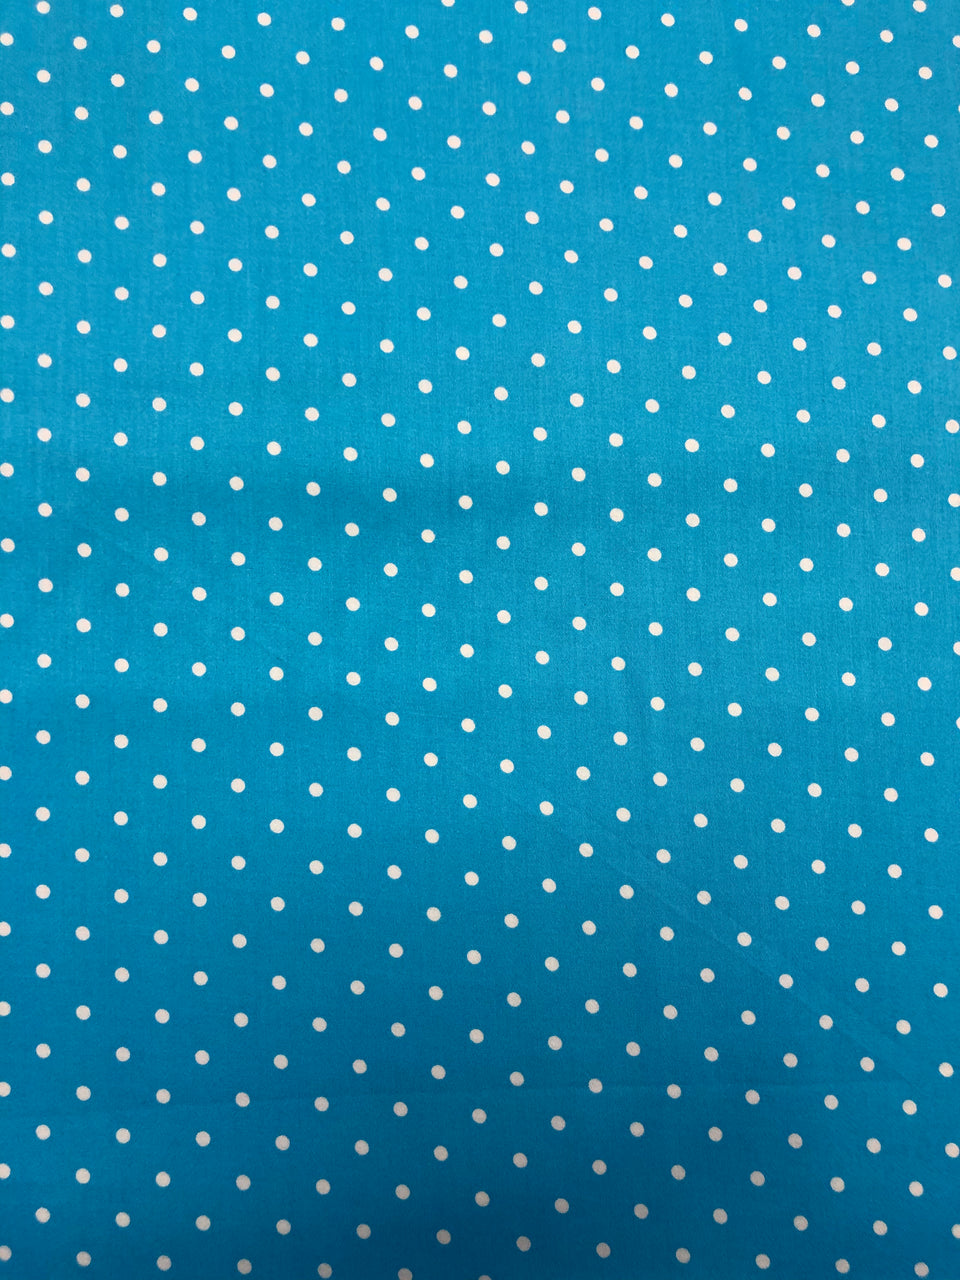 Polka Dot - Turquoise (1/4")